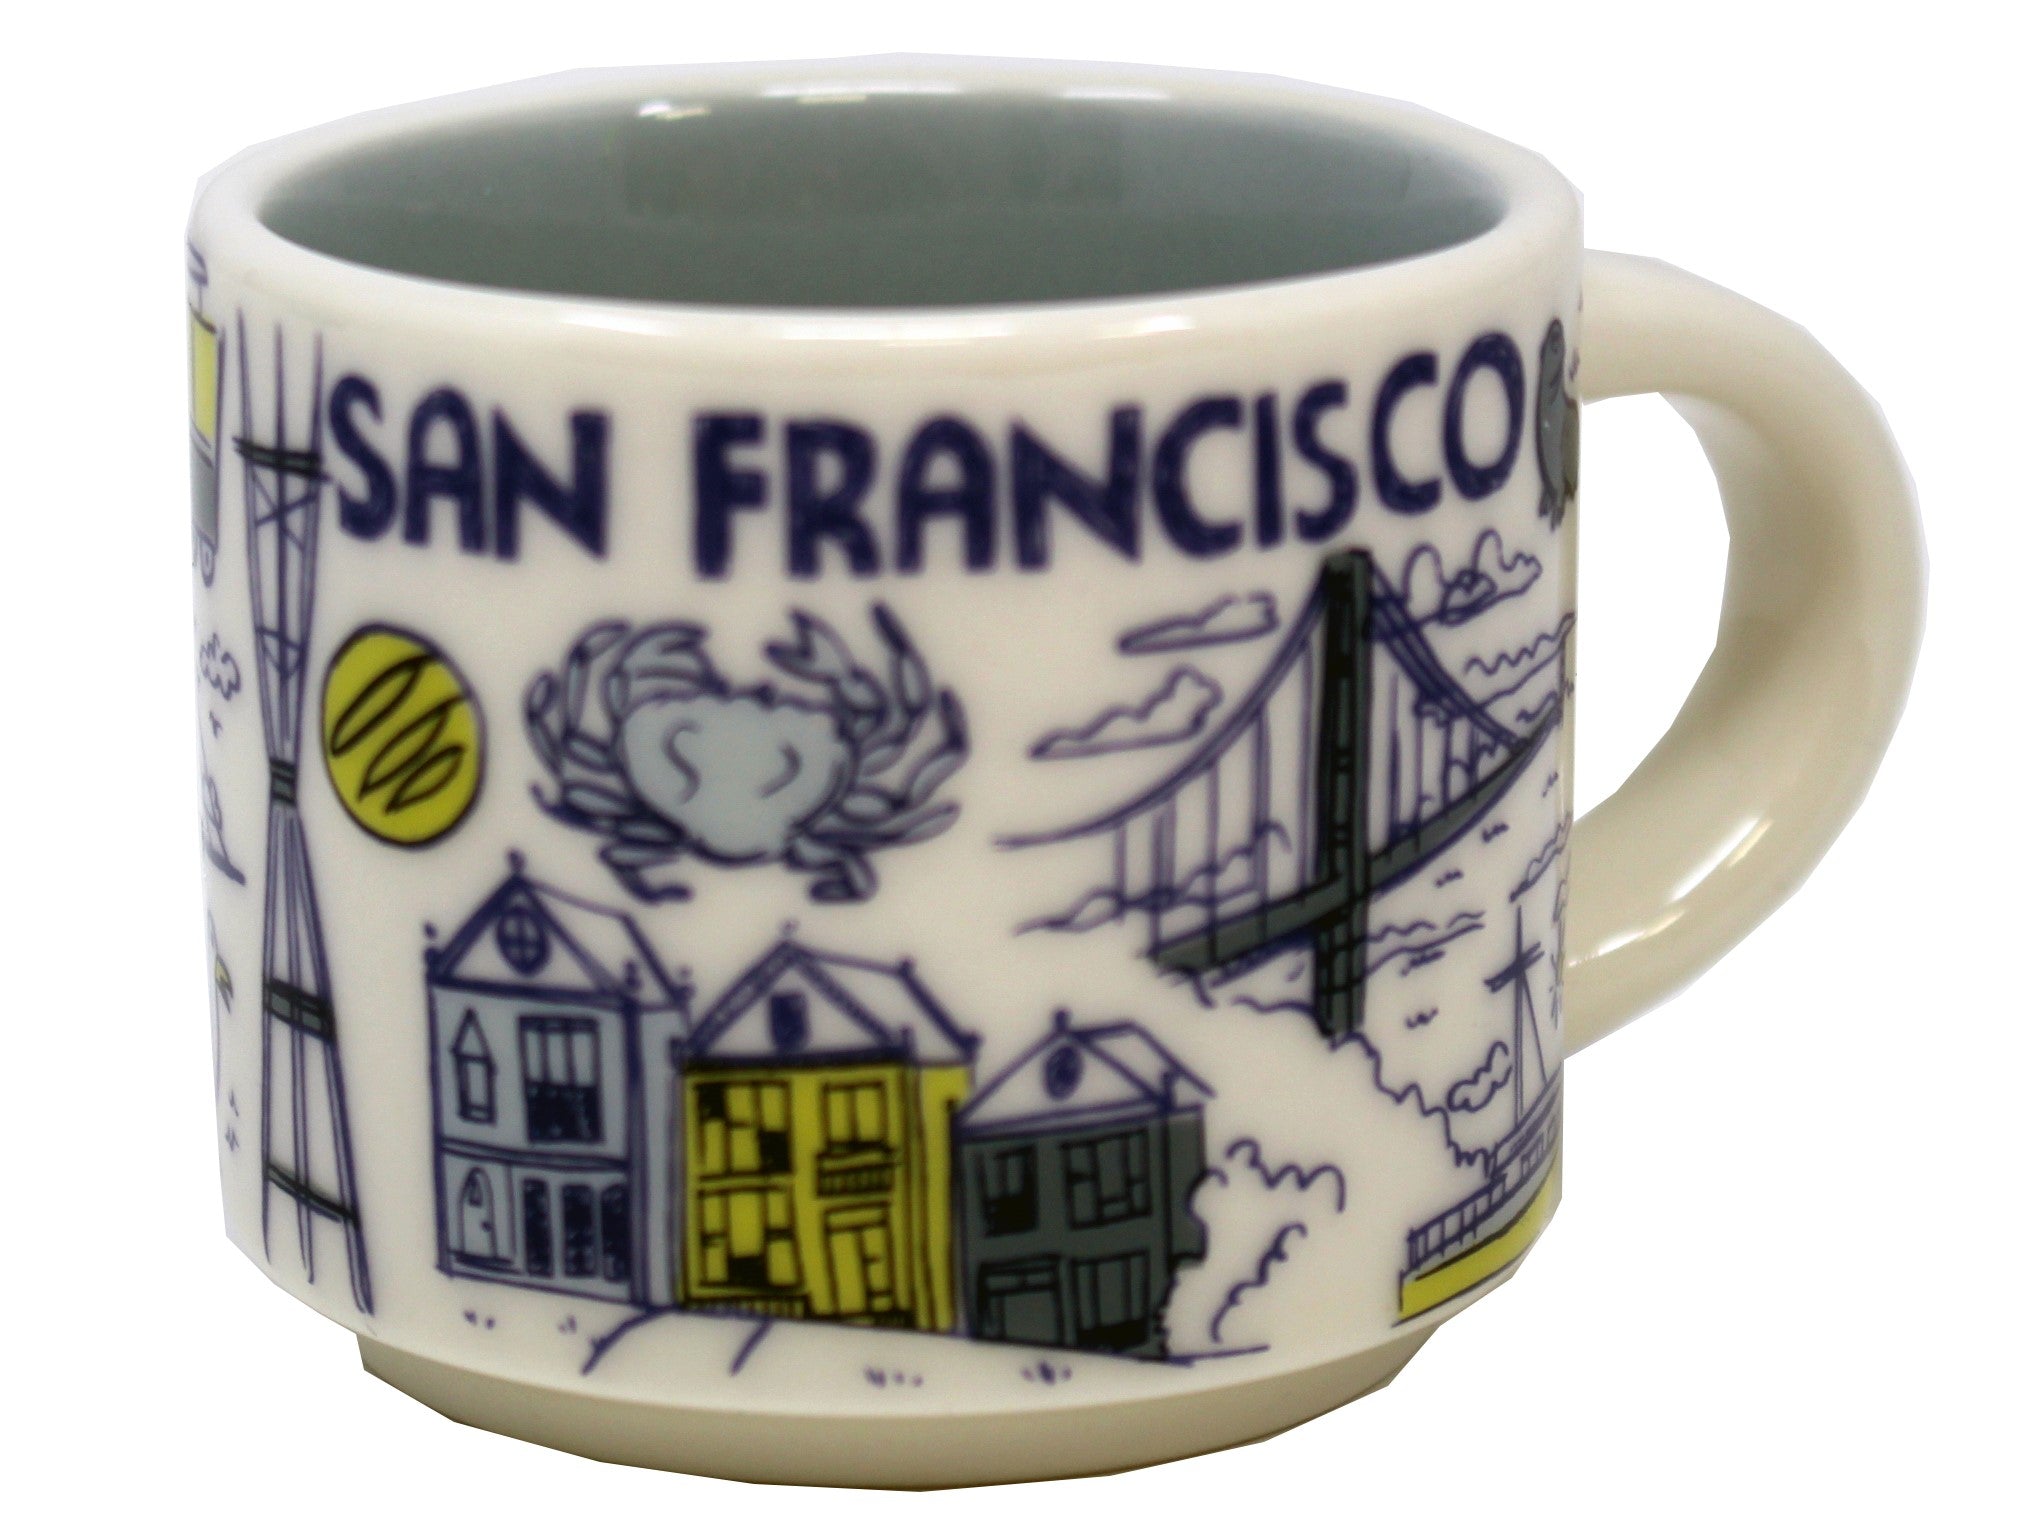 Starbucks Been There Series San Fransisco Ceramic Demitasse Ornament Mug, 2 Oz